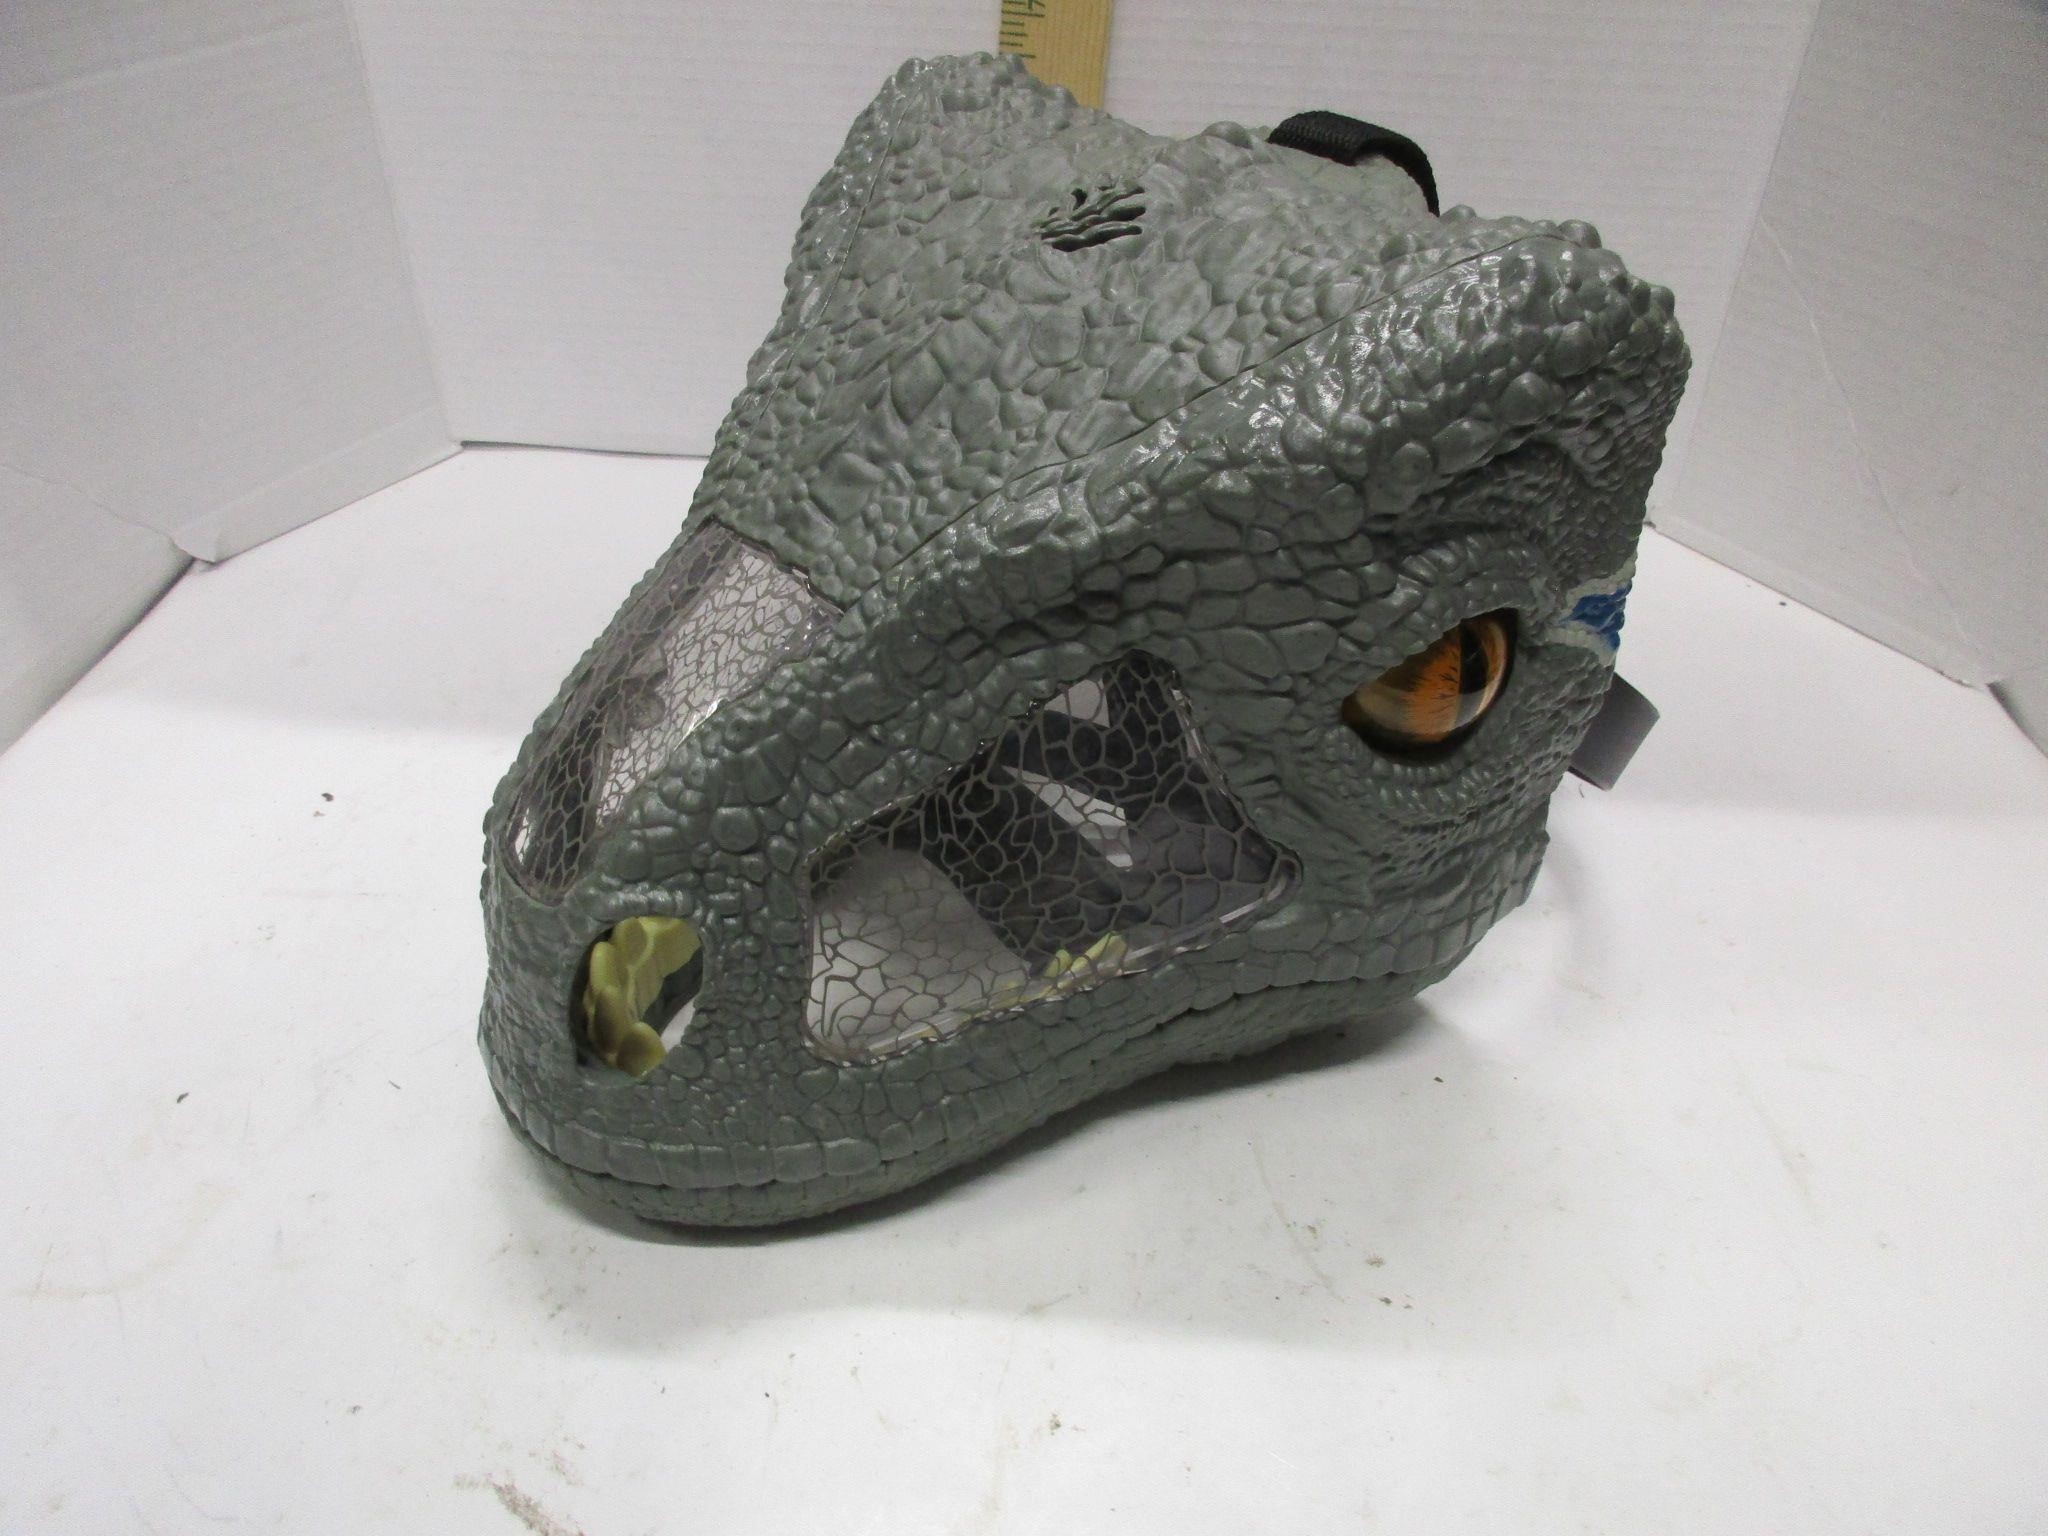 Velociraptor mask with sound effect